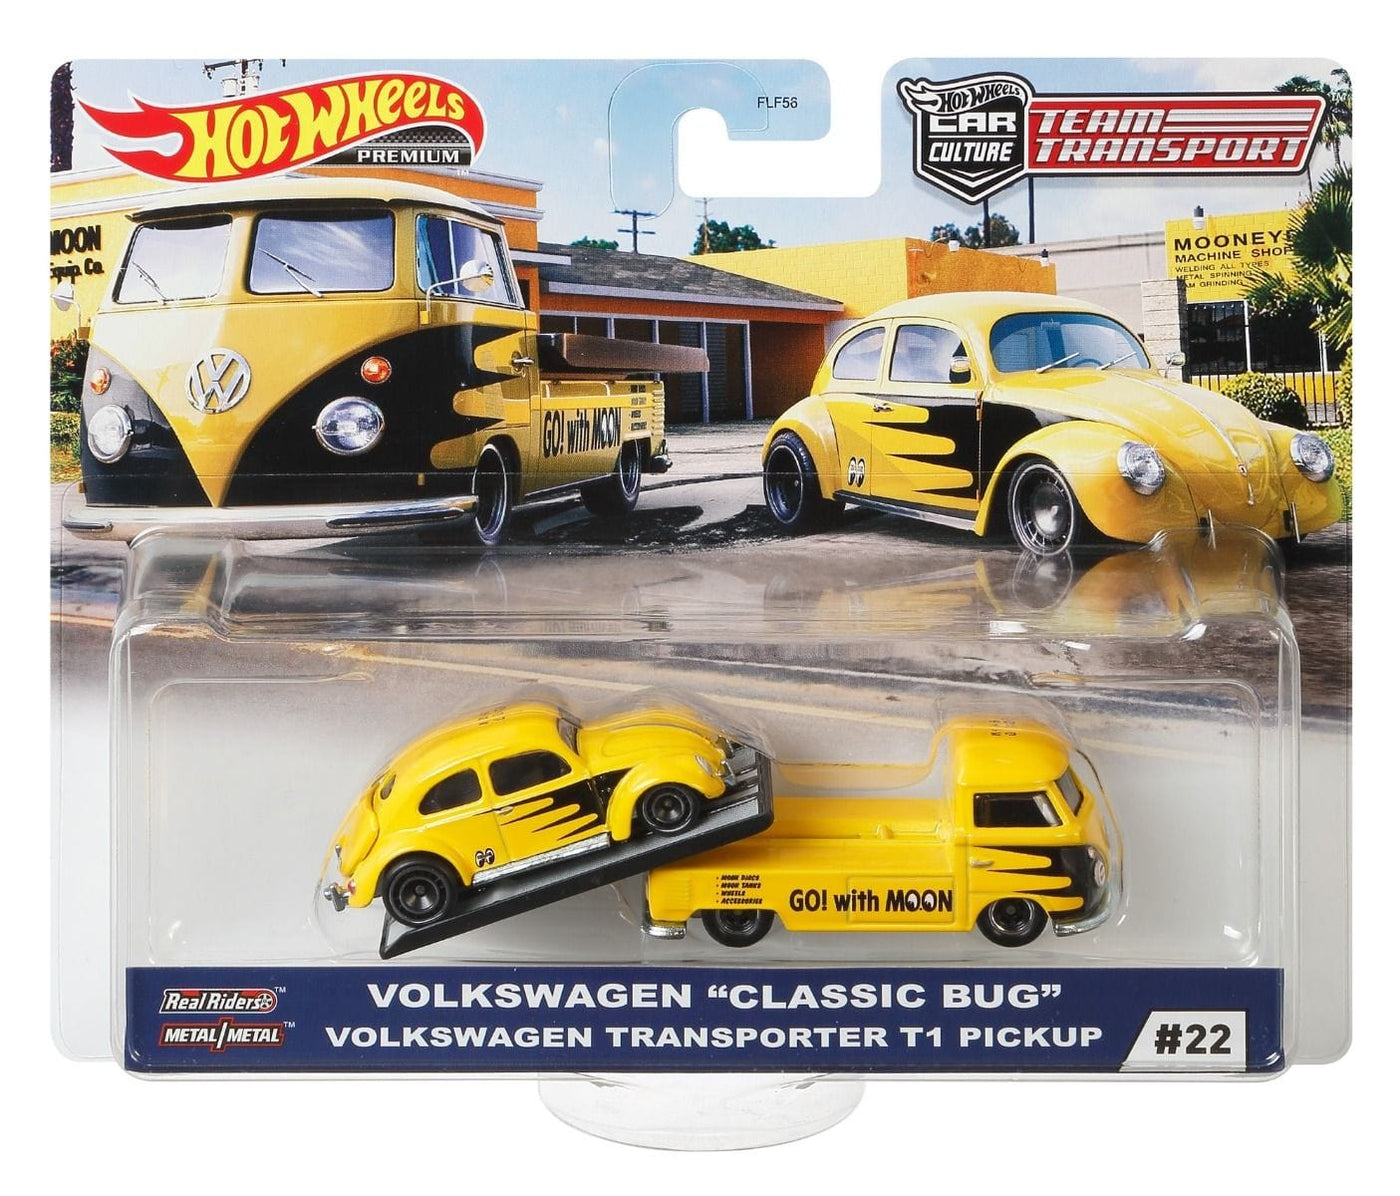 Volkswagen Classic Bug: Volkswagen Transporter T1 Pickup | Hot Wheels® by Hot Wheels®, USA Toy